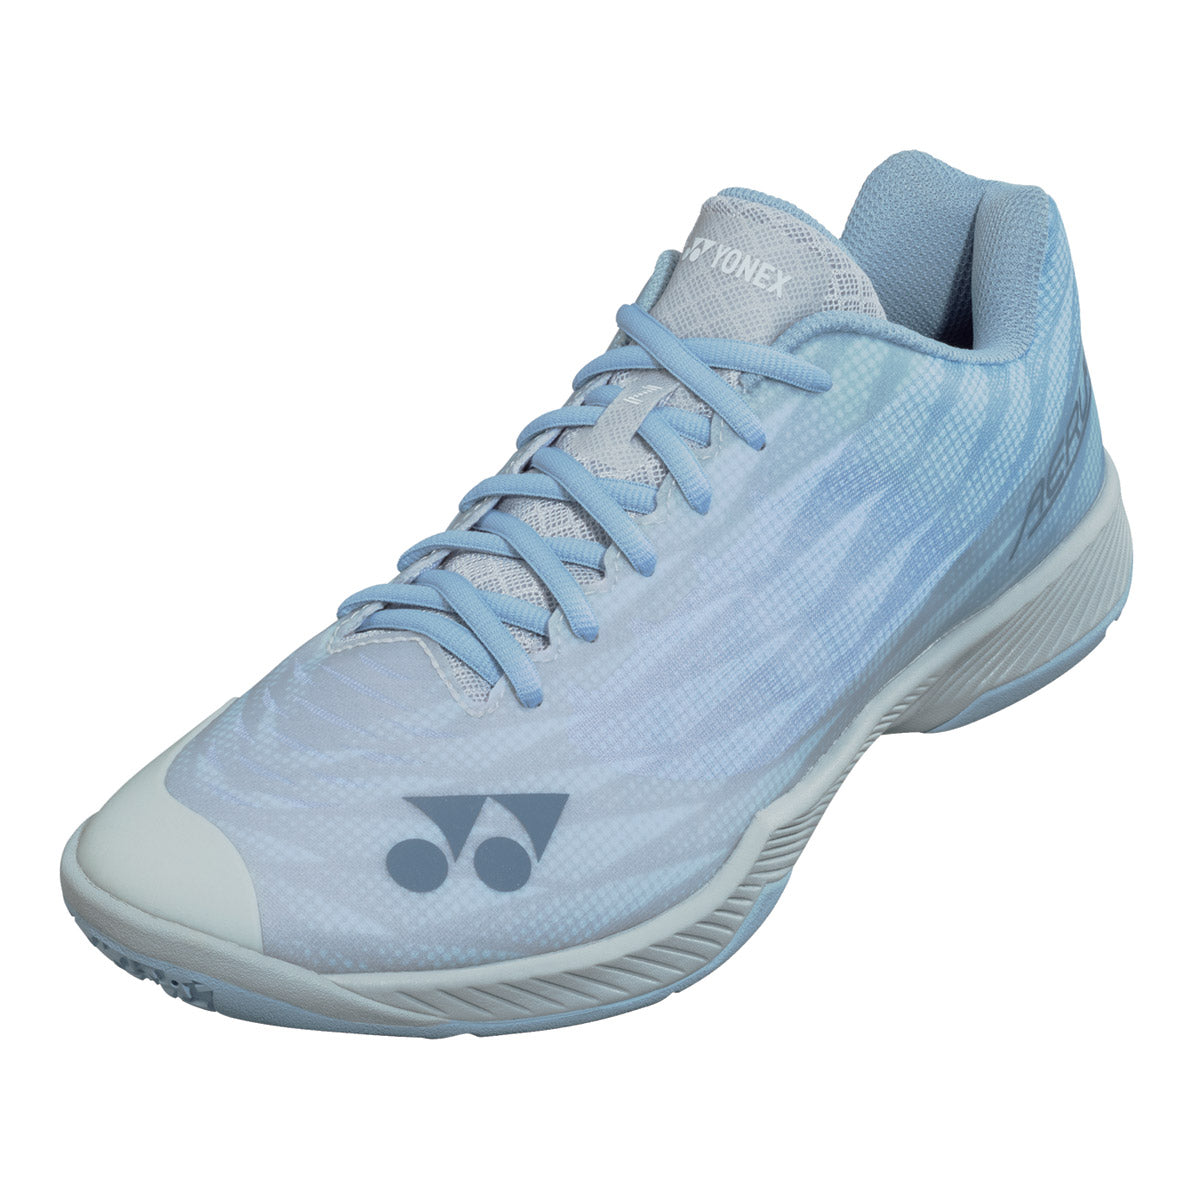 Yonex Mens Aerus Z2 Badminton Shoes - Light Blue